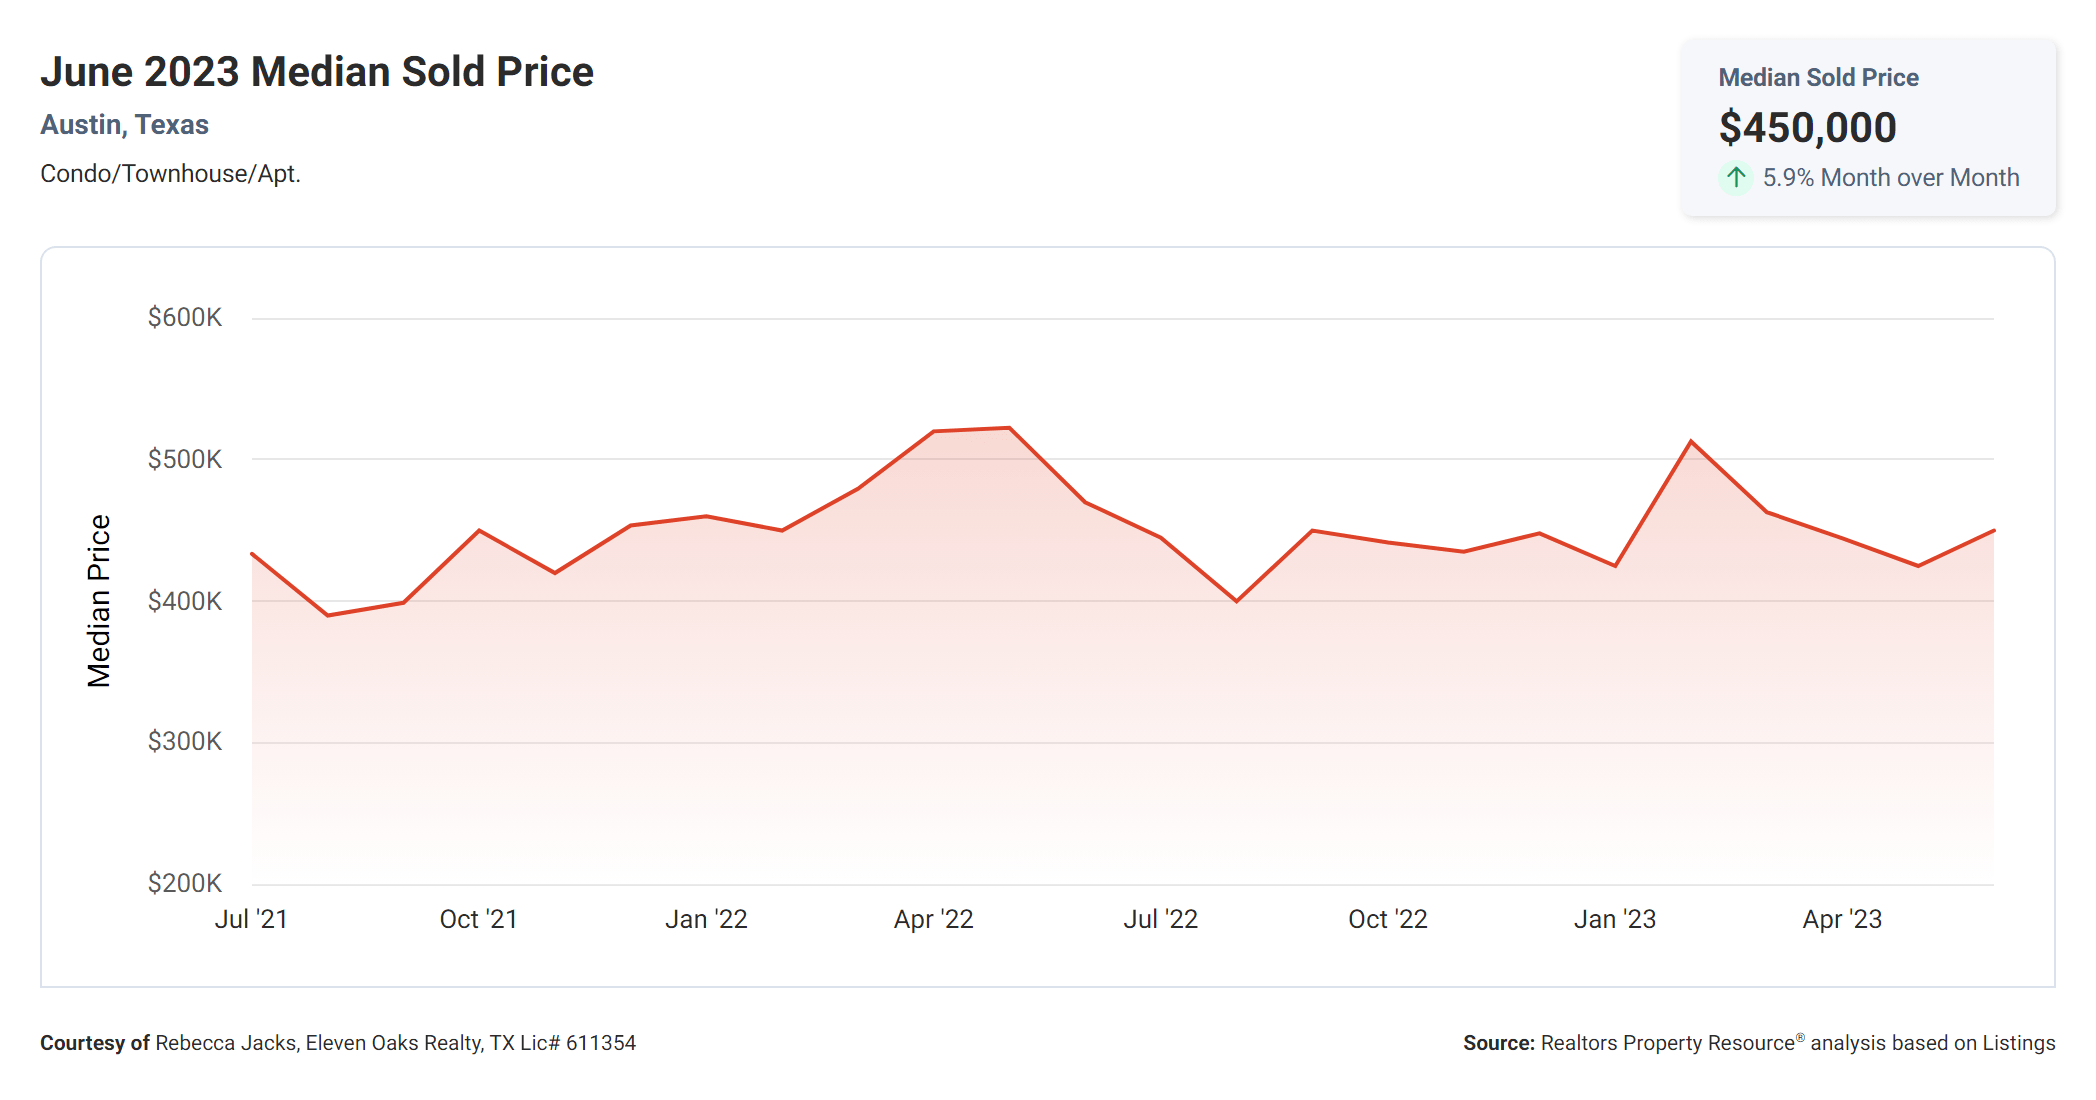 June 2023 median sold price for Austin condos